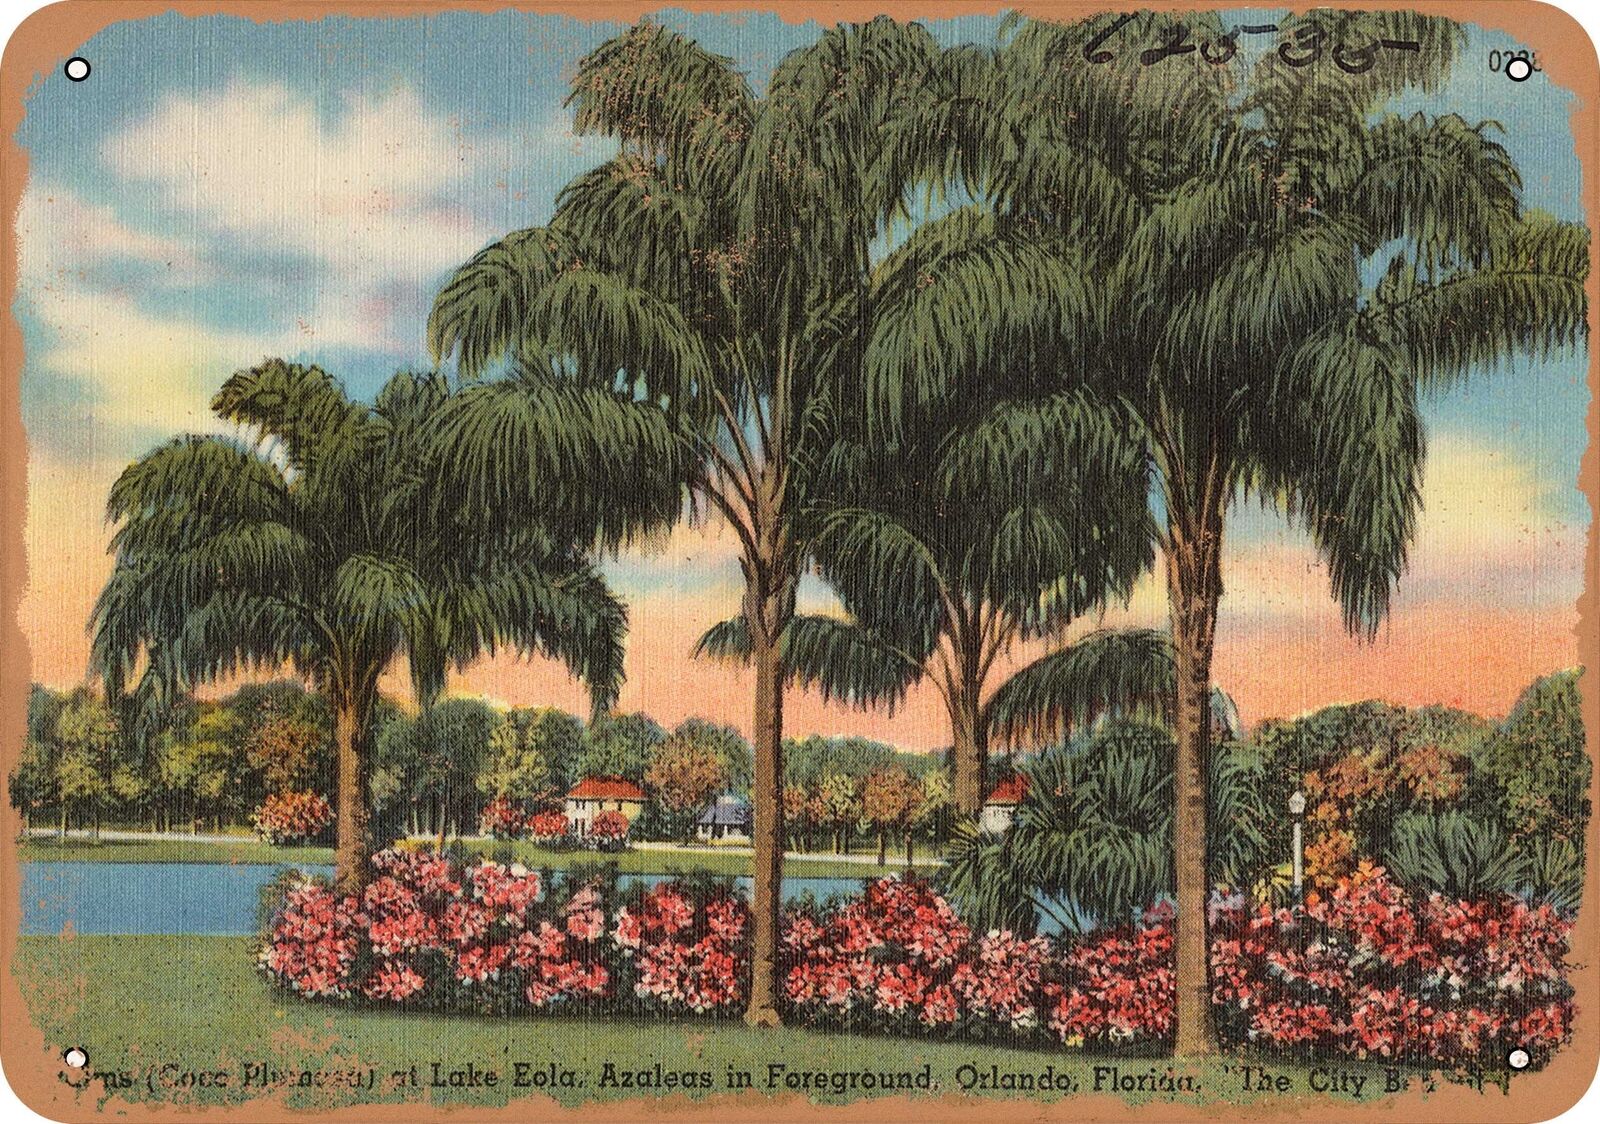 Metal Sign - Florida Postcard - Palms (Coco Plumosa) at Lake Eola, azaleas in f